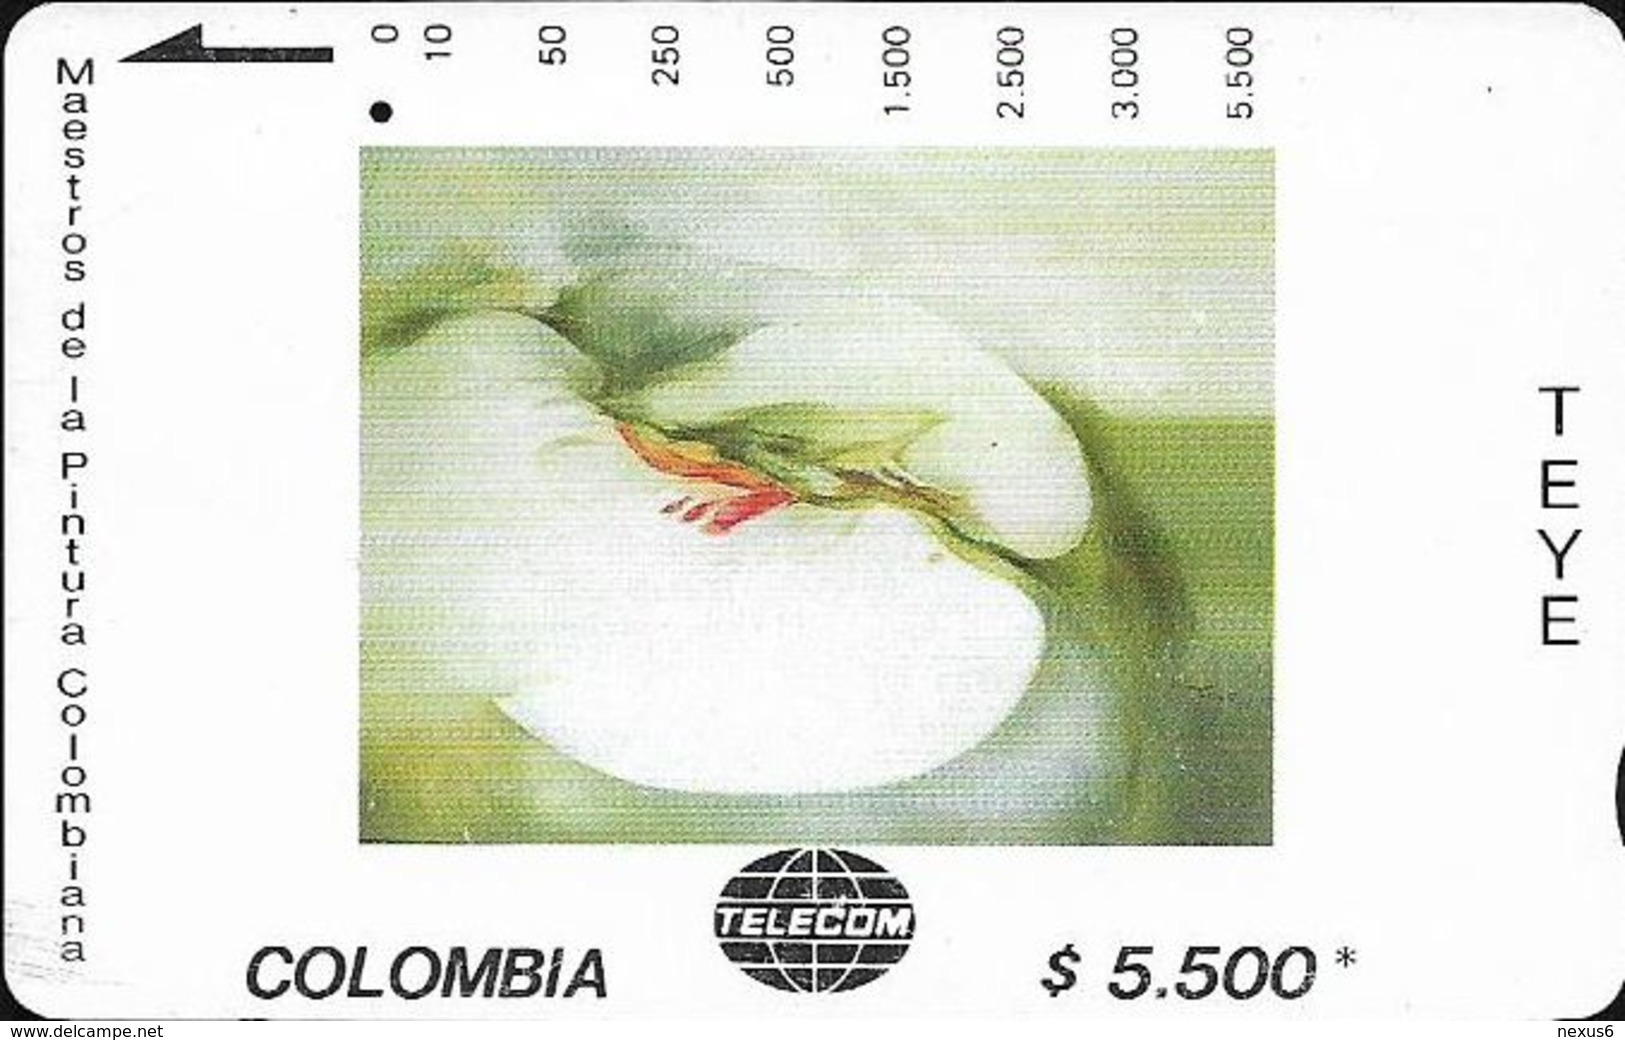 Colombia - Telecom (Tamura) - Teye - Melus, 5.500$Cp, 10.000ex, Used - Colombia